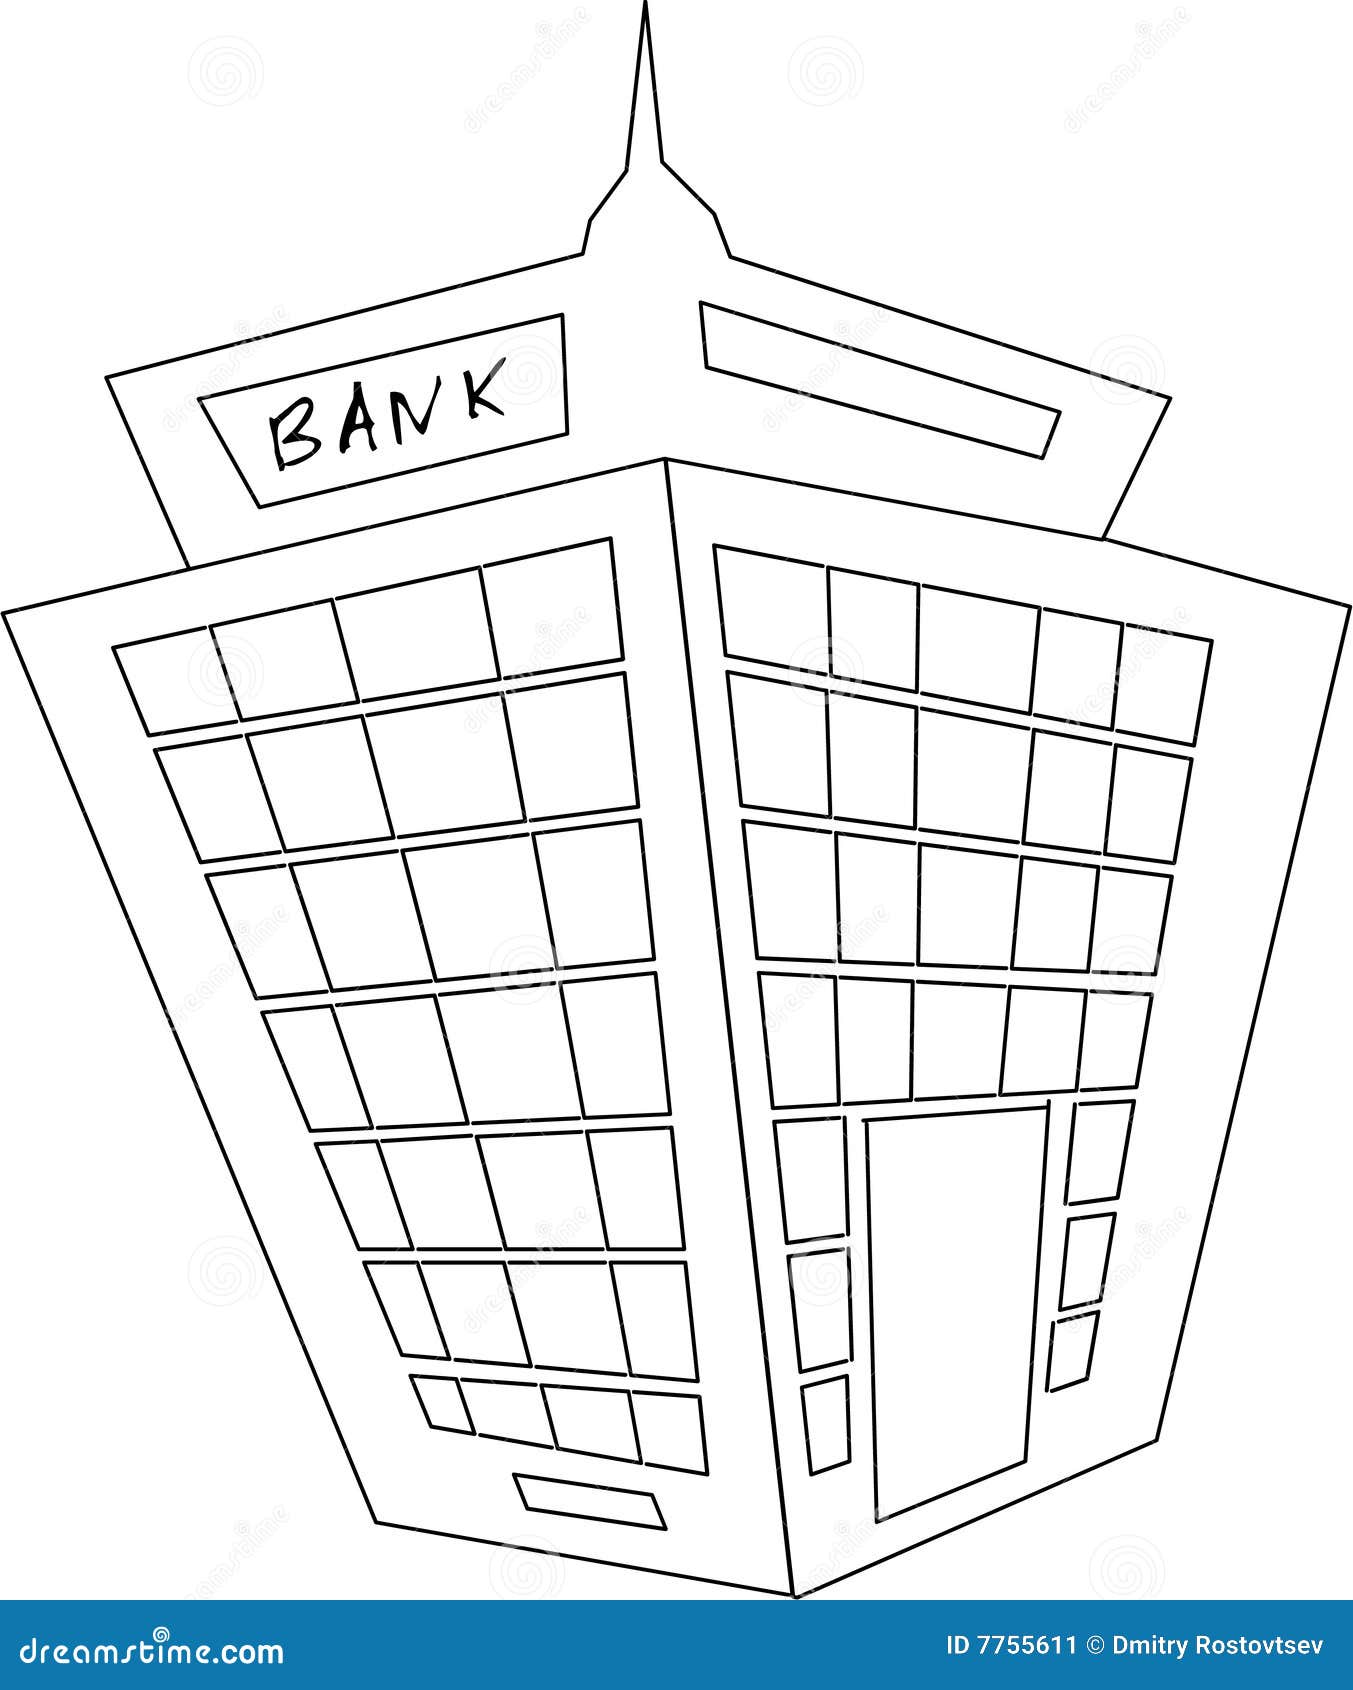 Line Drawing Bank Building Stock Illustration 1484147348